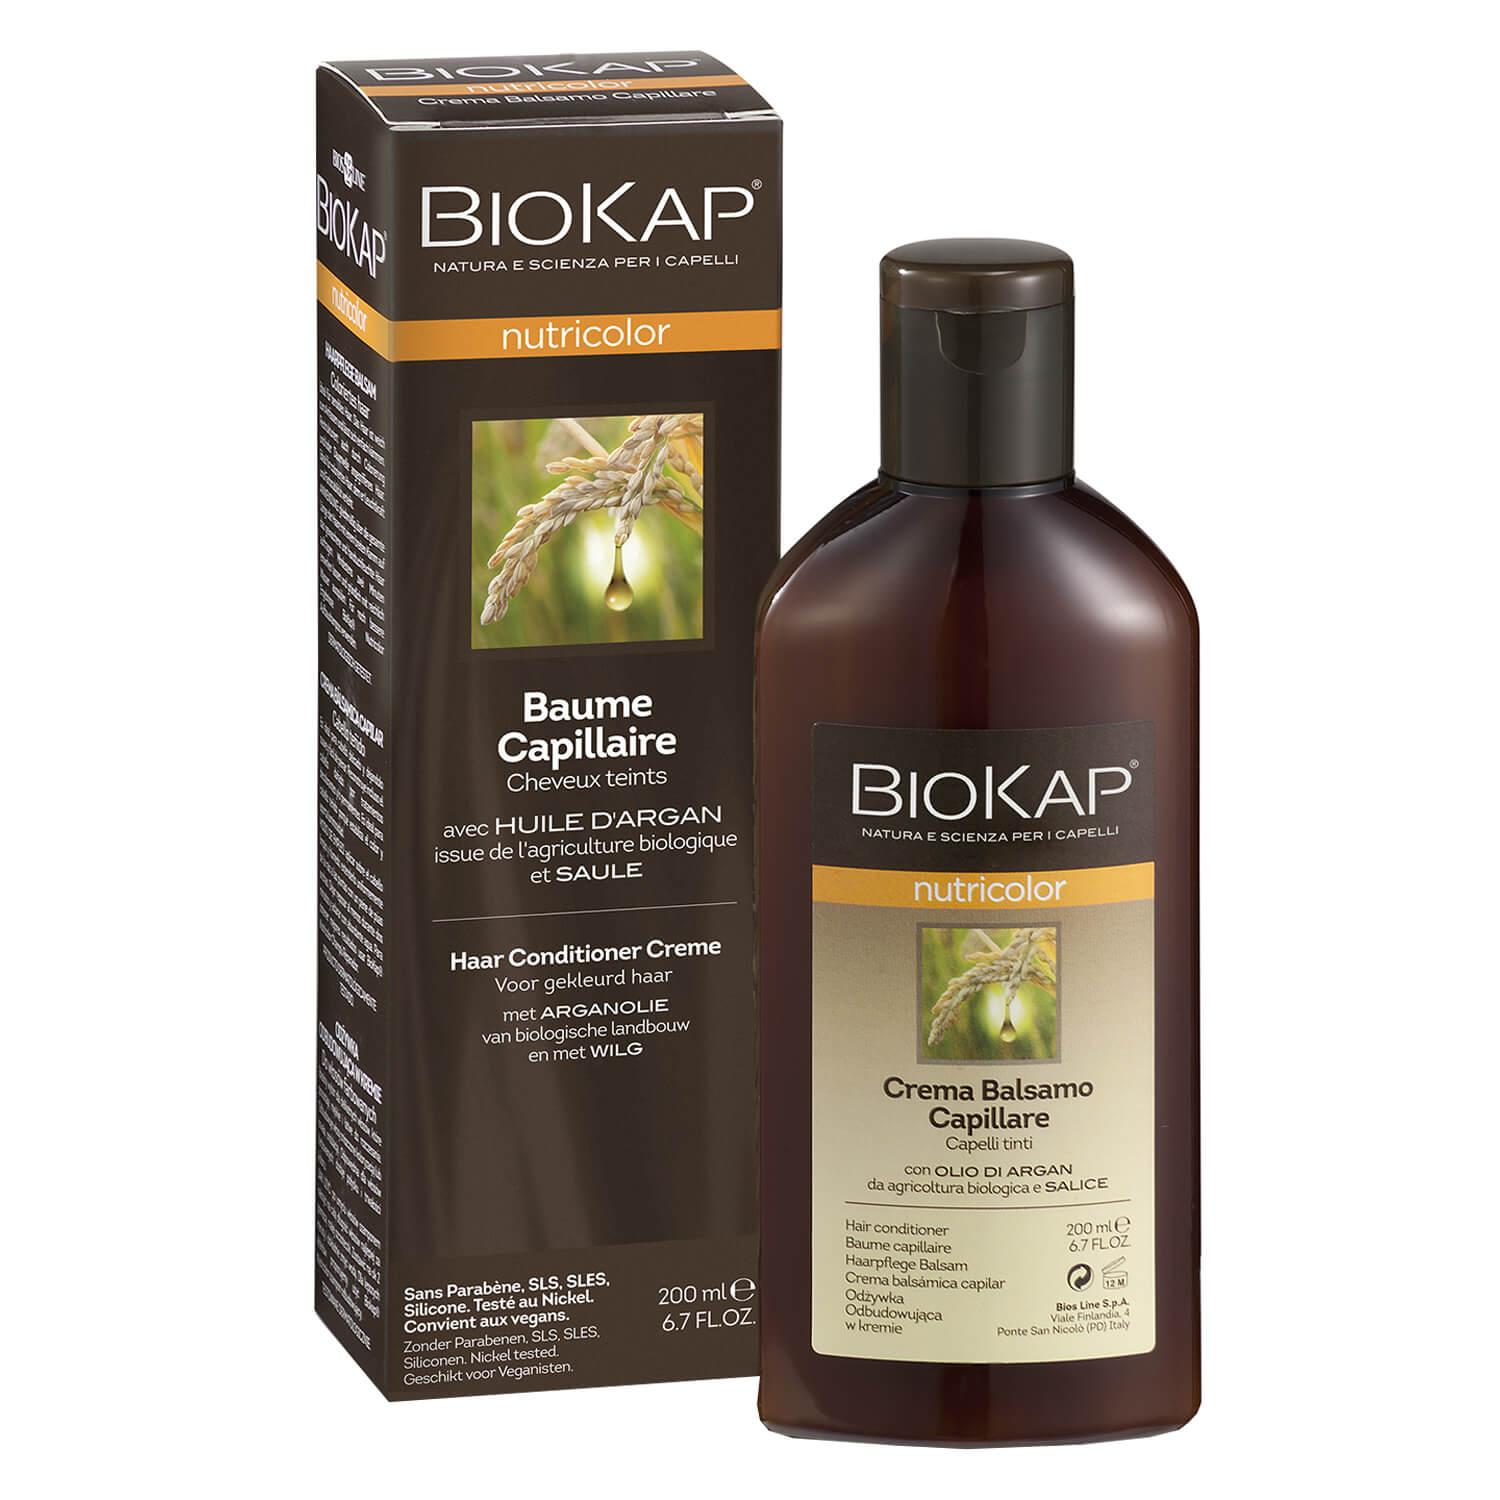 BIOKAP Nutricolor - Restructuring Conditioner Cream